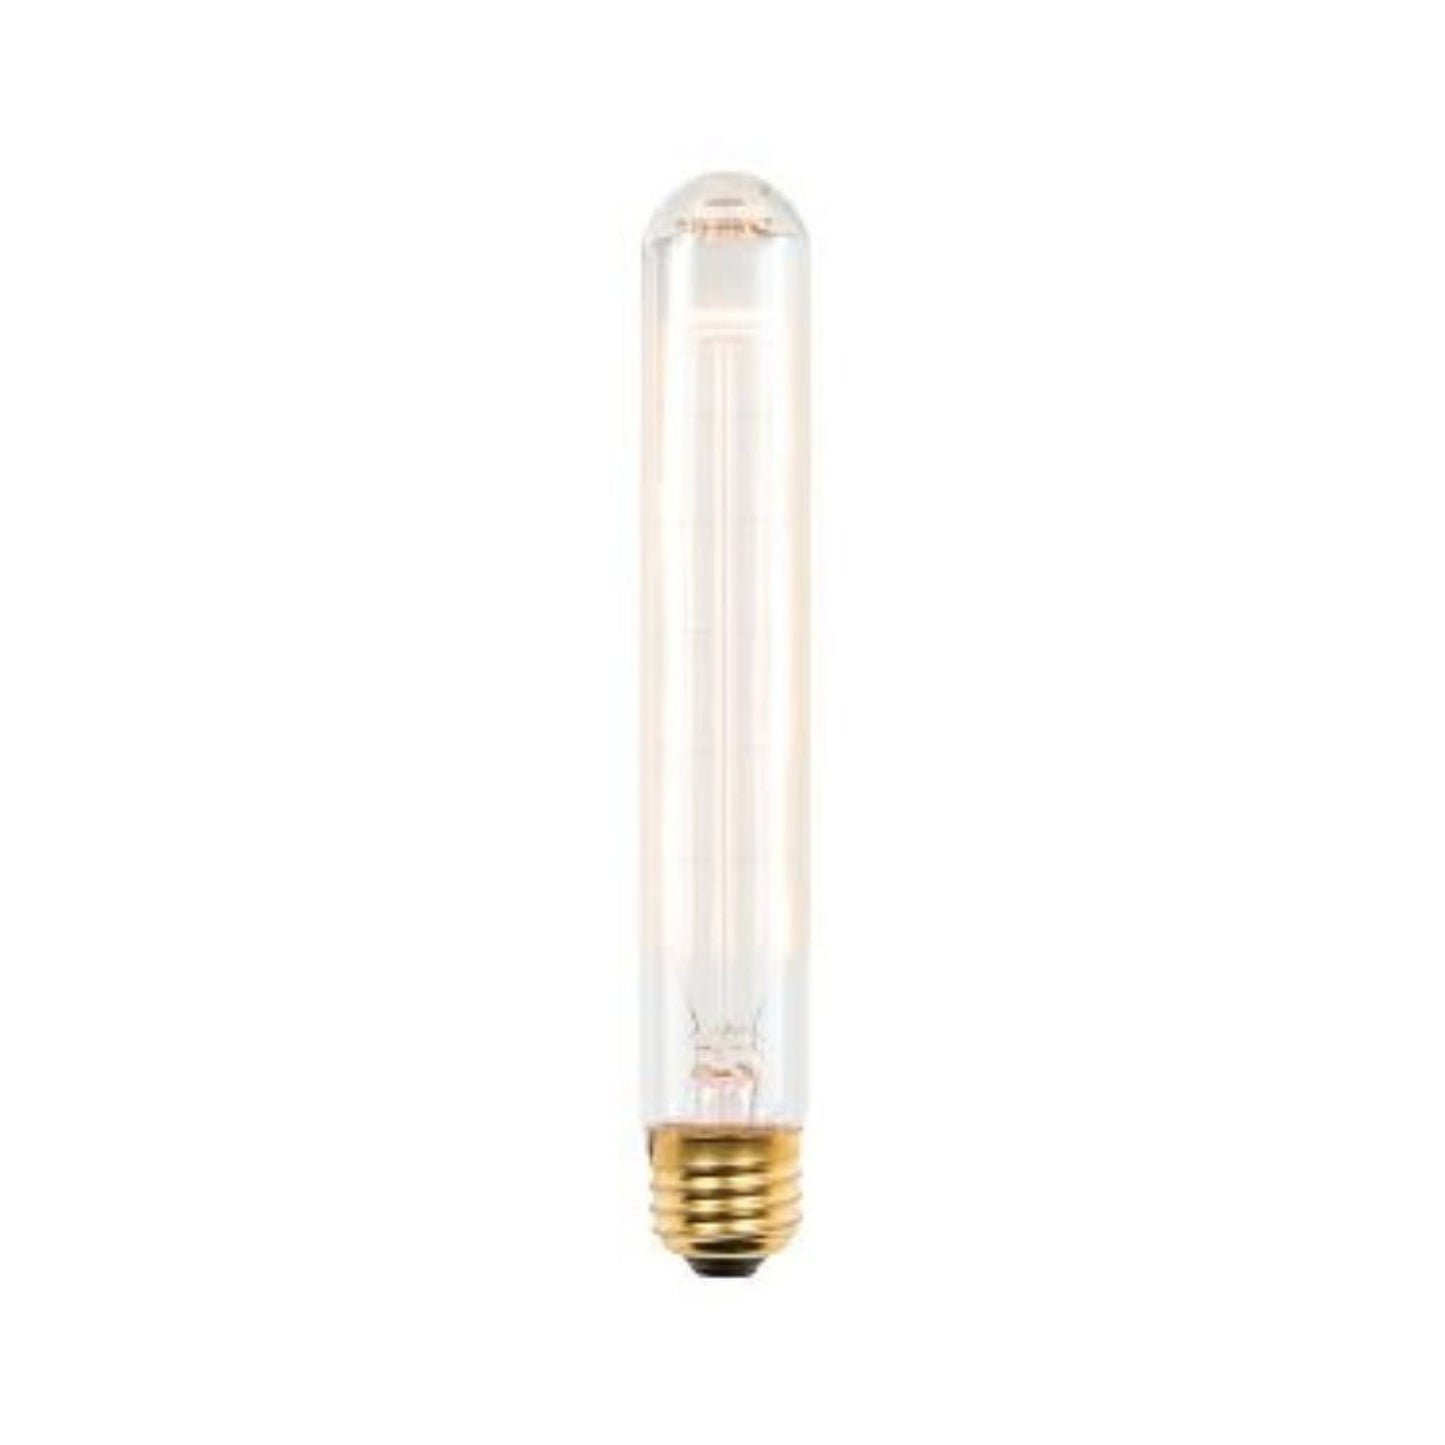 Craftmade 60-Watt T9 Clear Finish, E26 Medium Base, 7.3" M.O.L., 2200K Warm White Incandescent Light Bulb